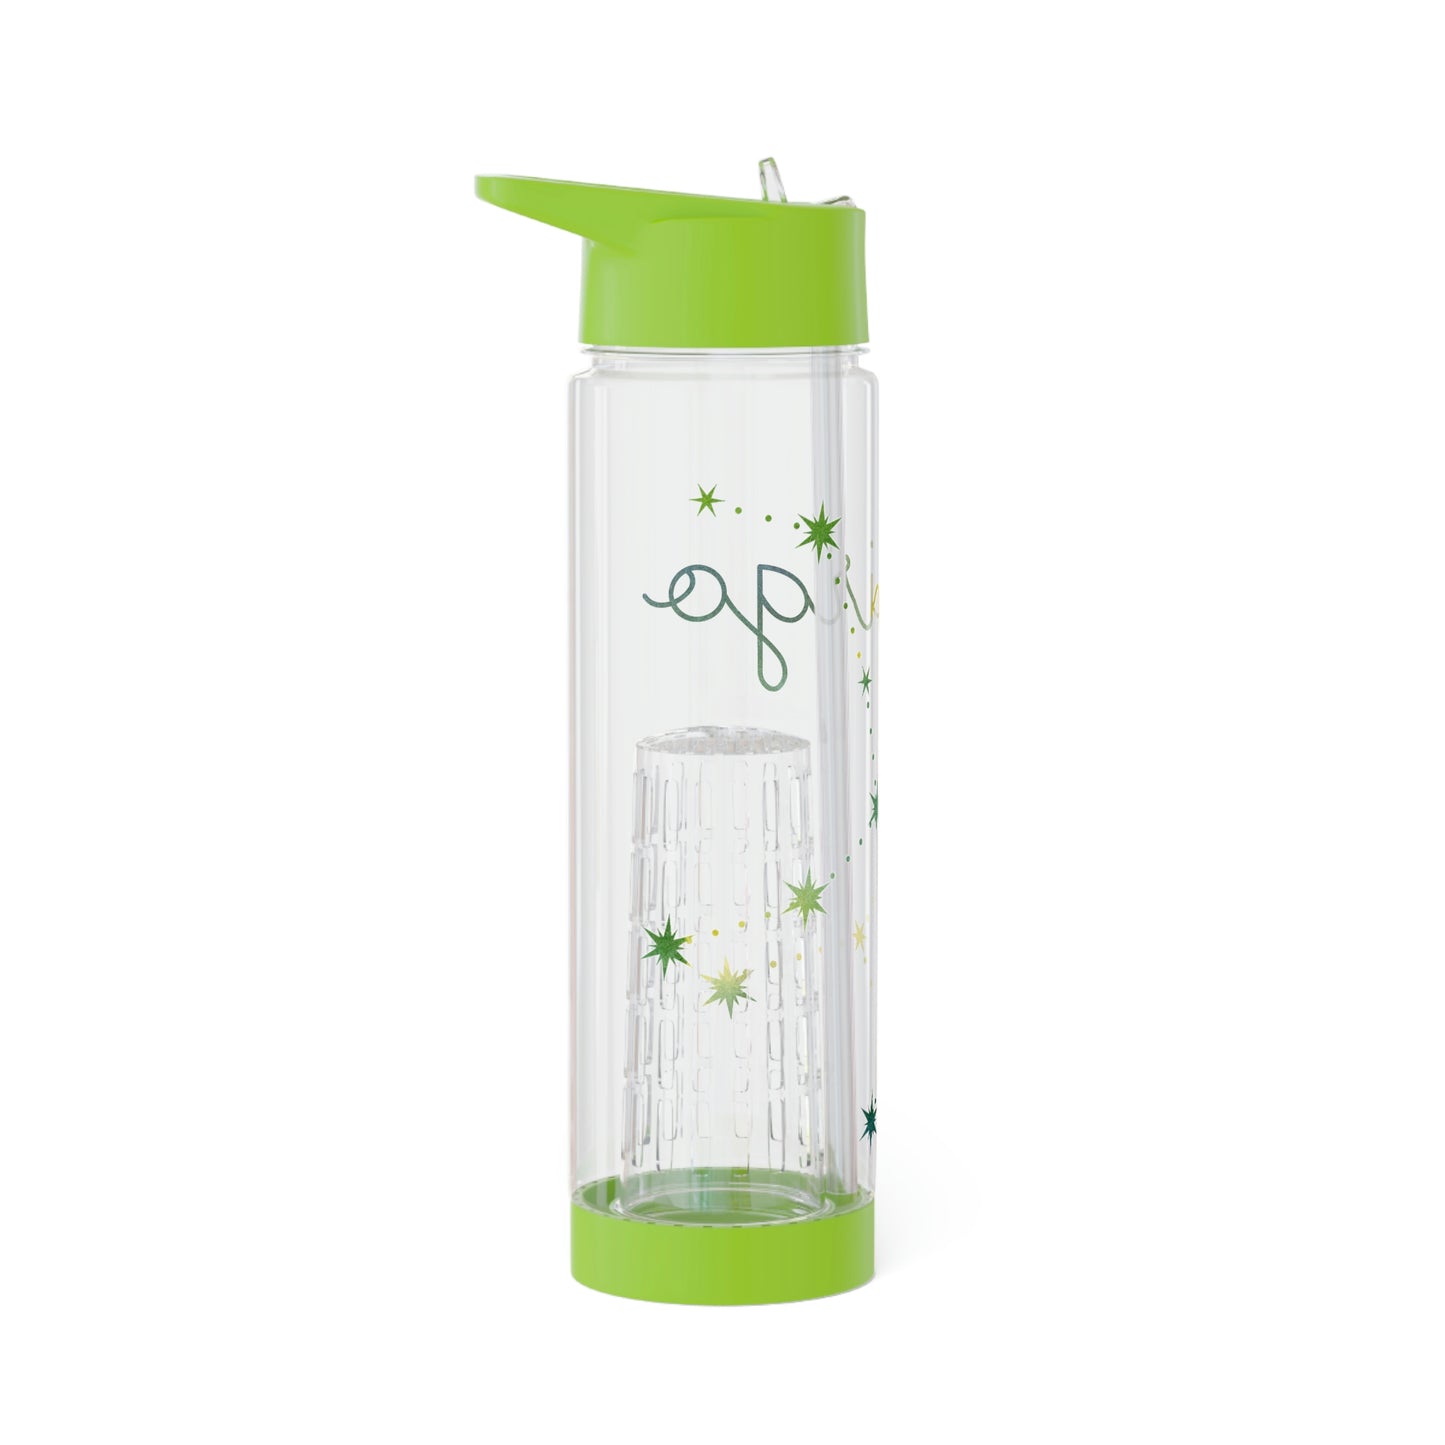 Virgo Constellation Infuser Water Bottle